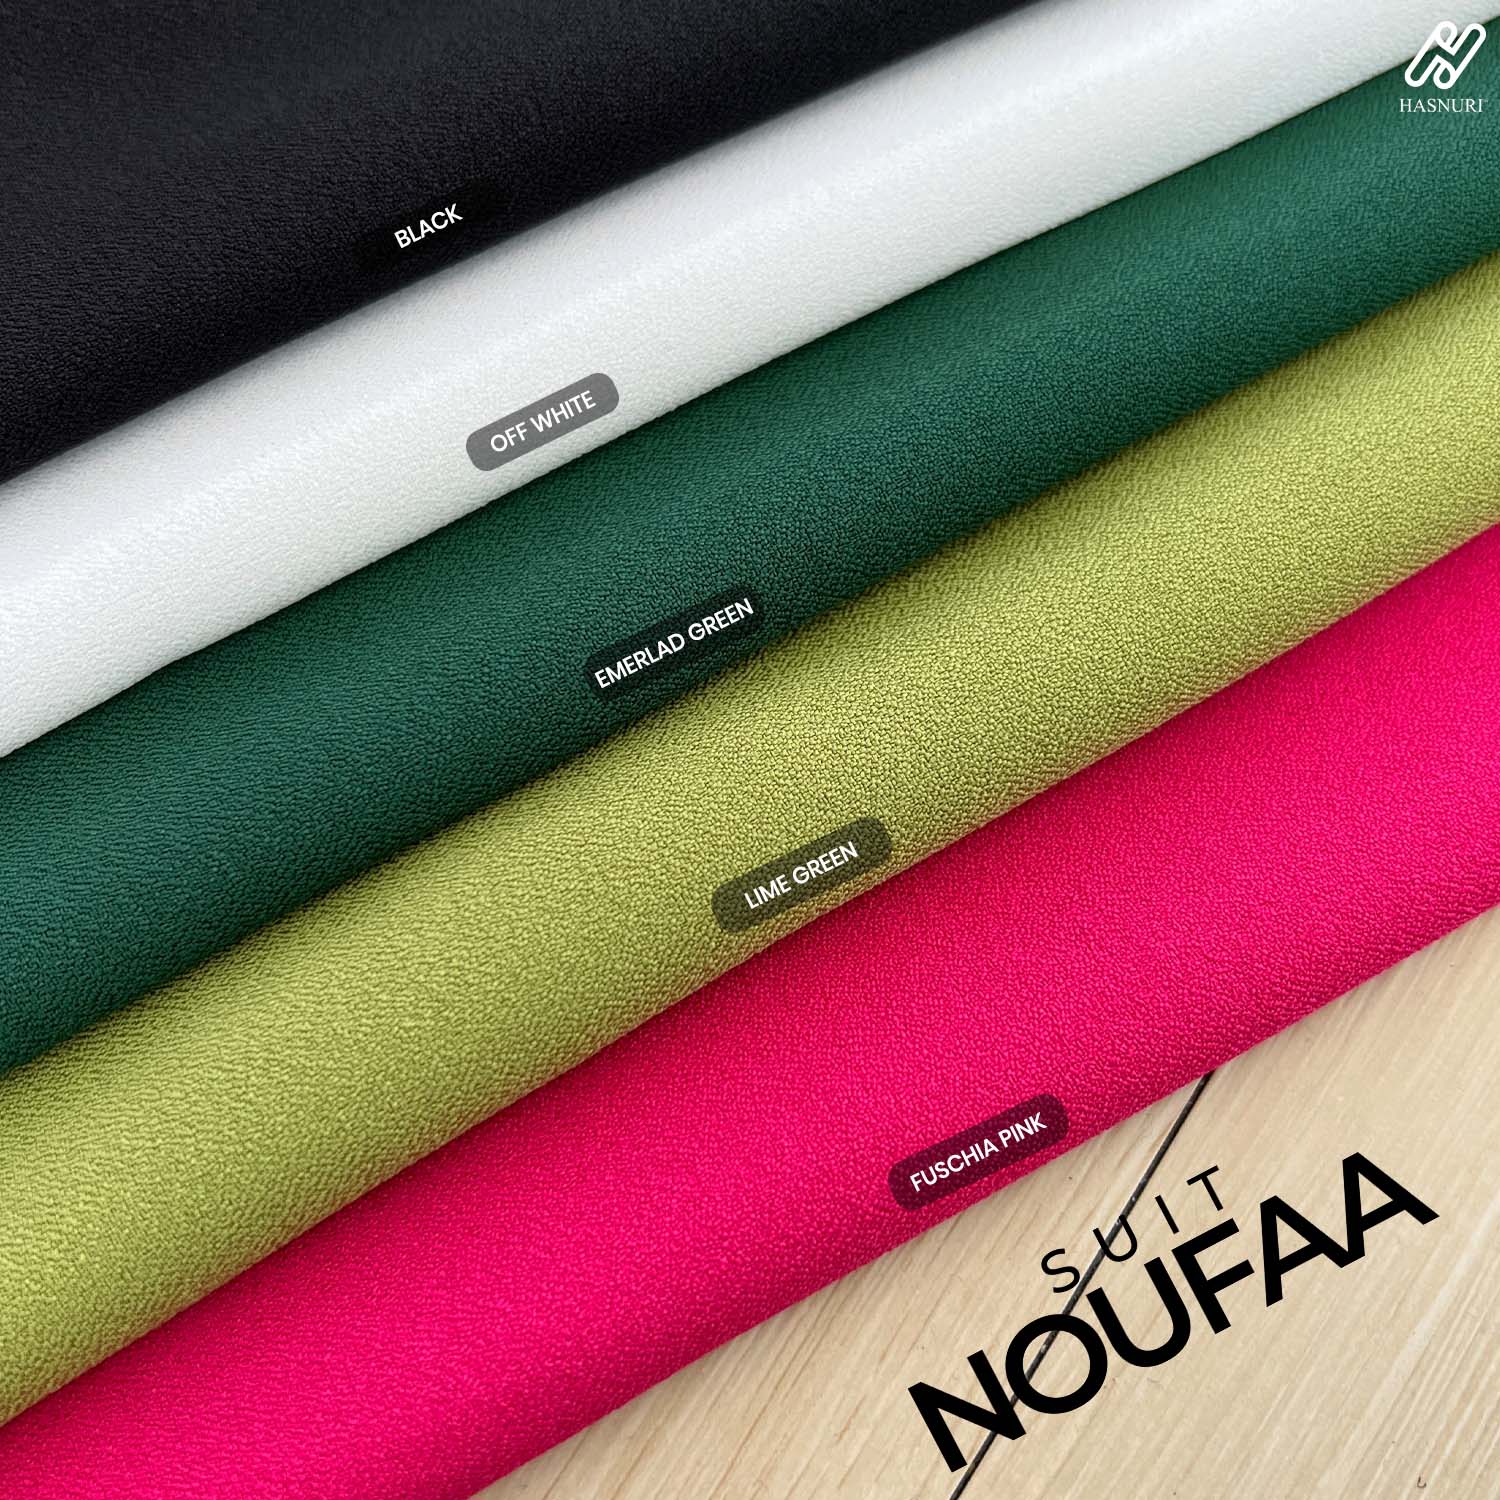 Suit Noufaa - Lime Green